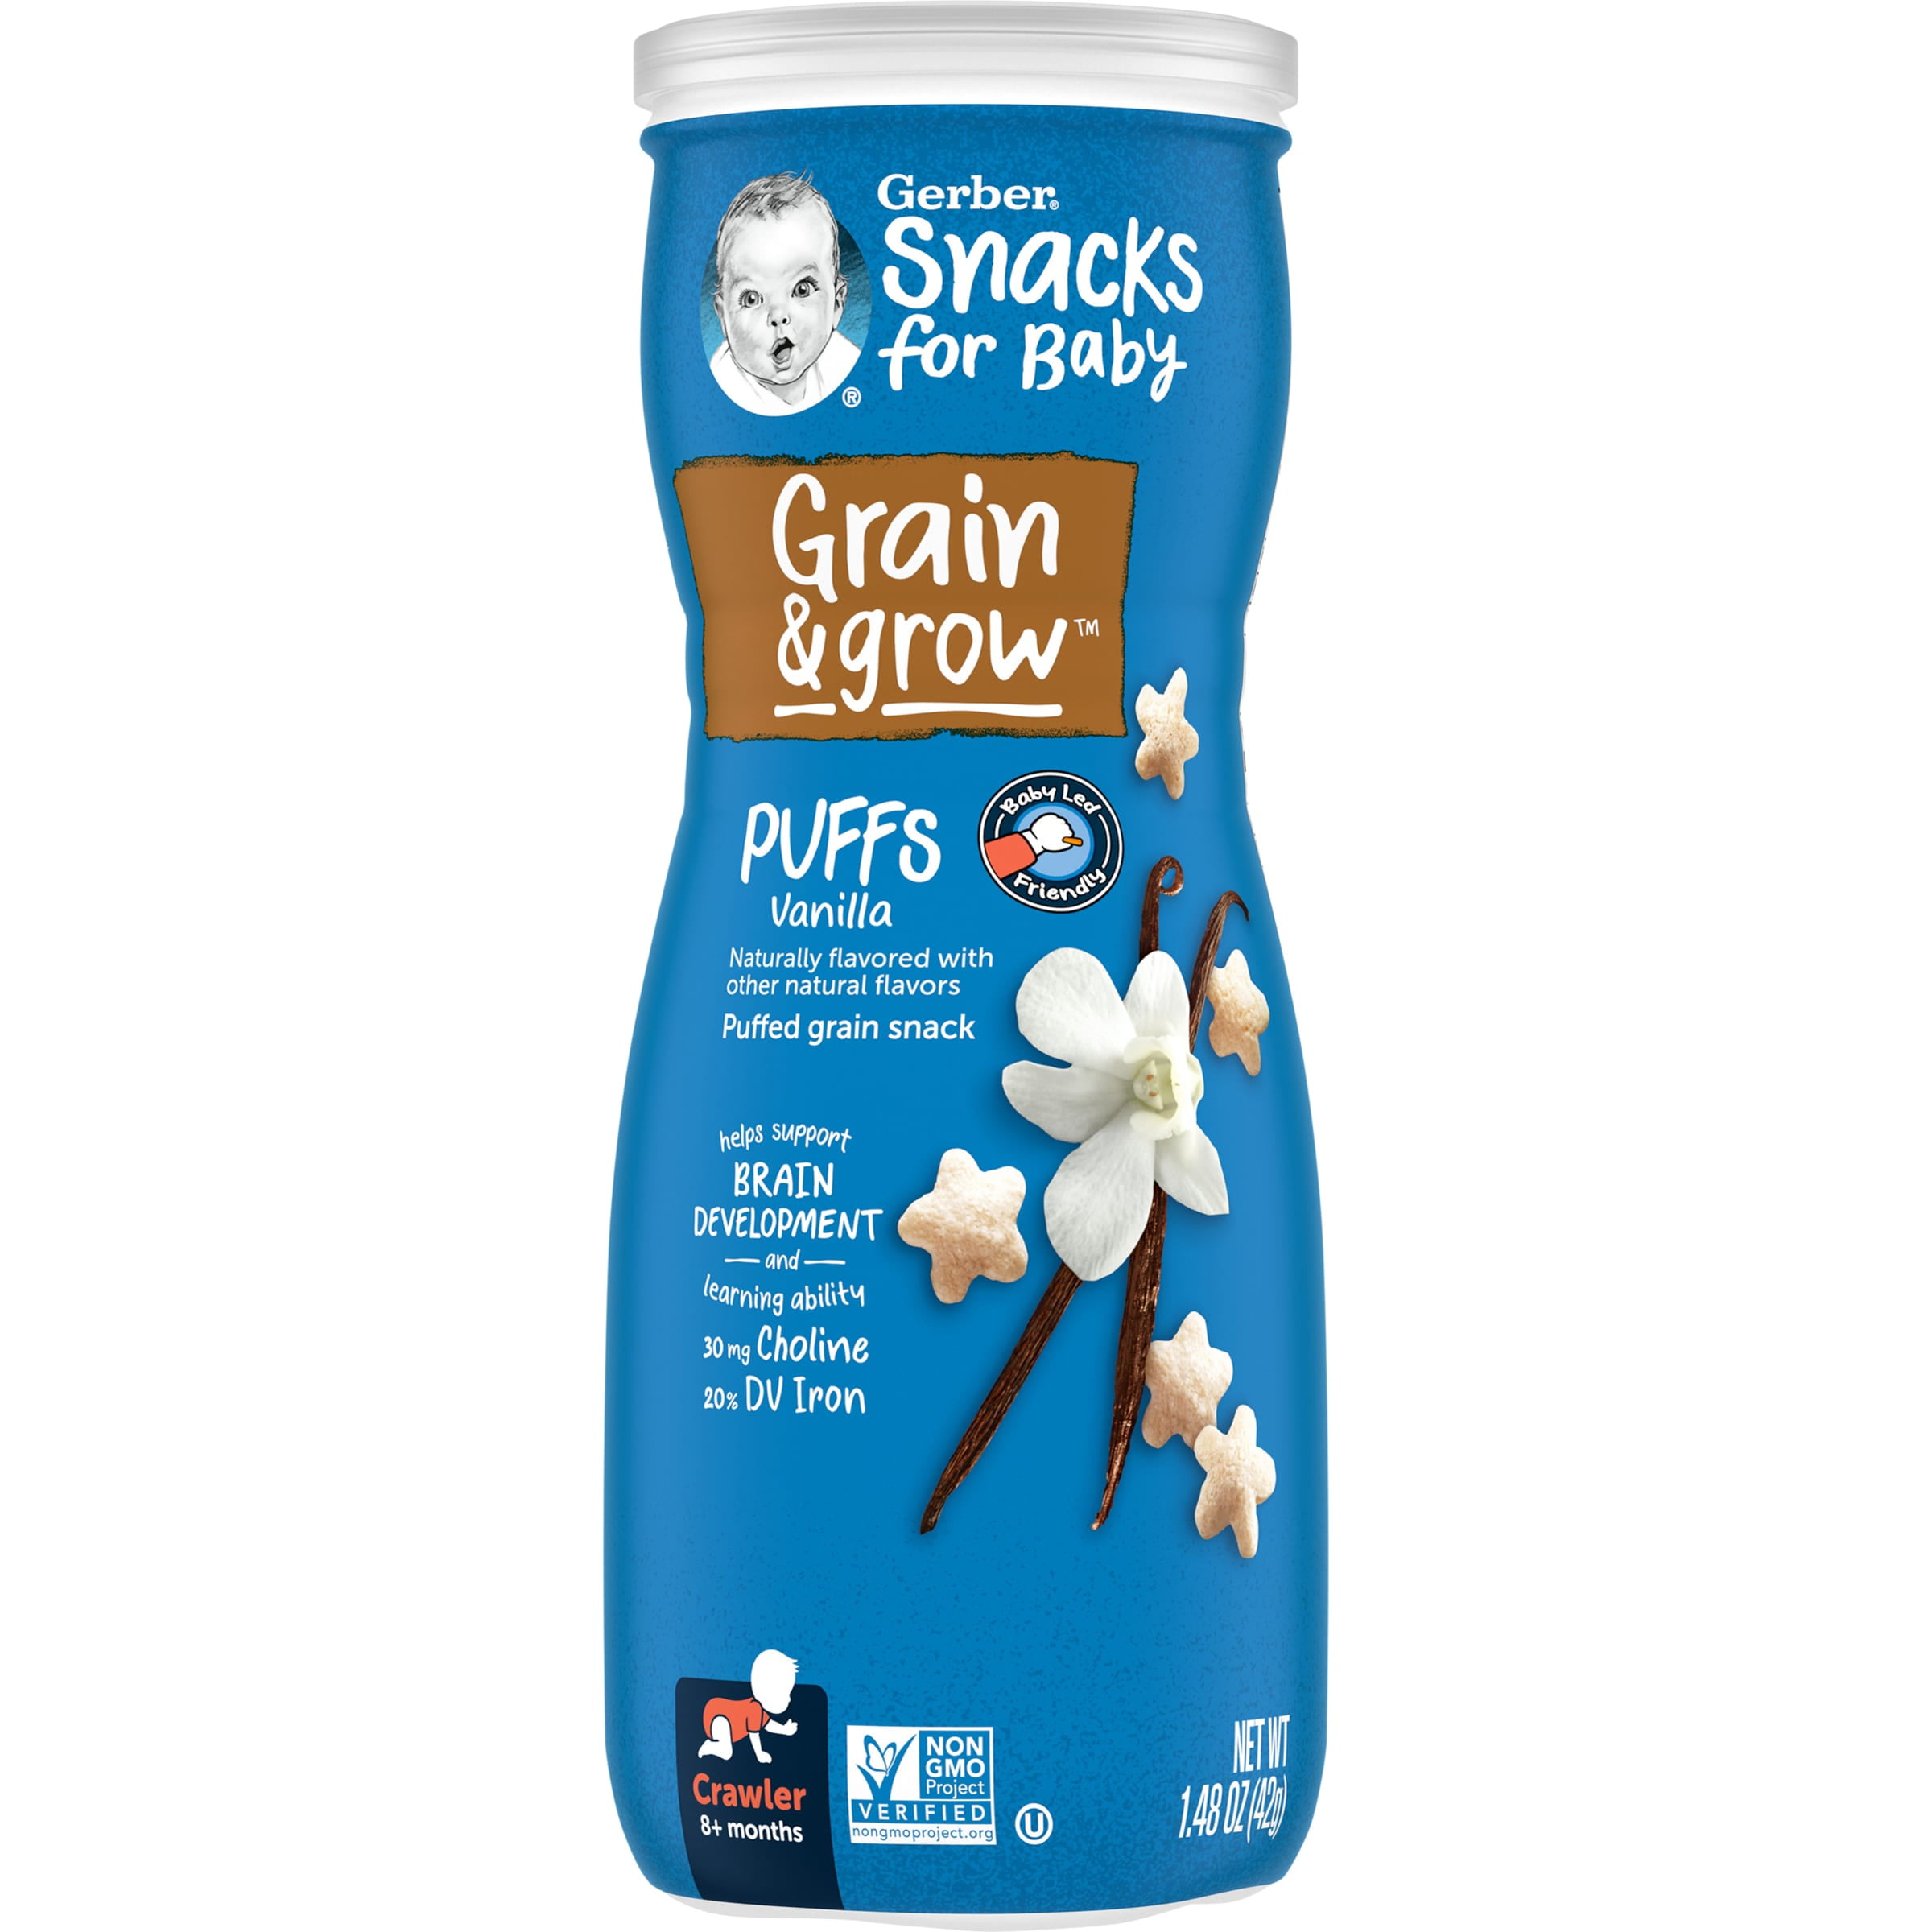 Gerber Snacks for Baby Grain & Grow Puffs, Vanilla, 1.48 oz Canister - Walmart.com